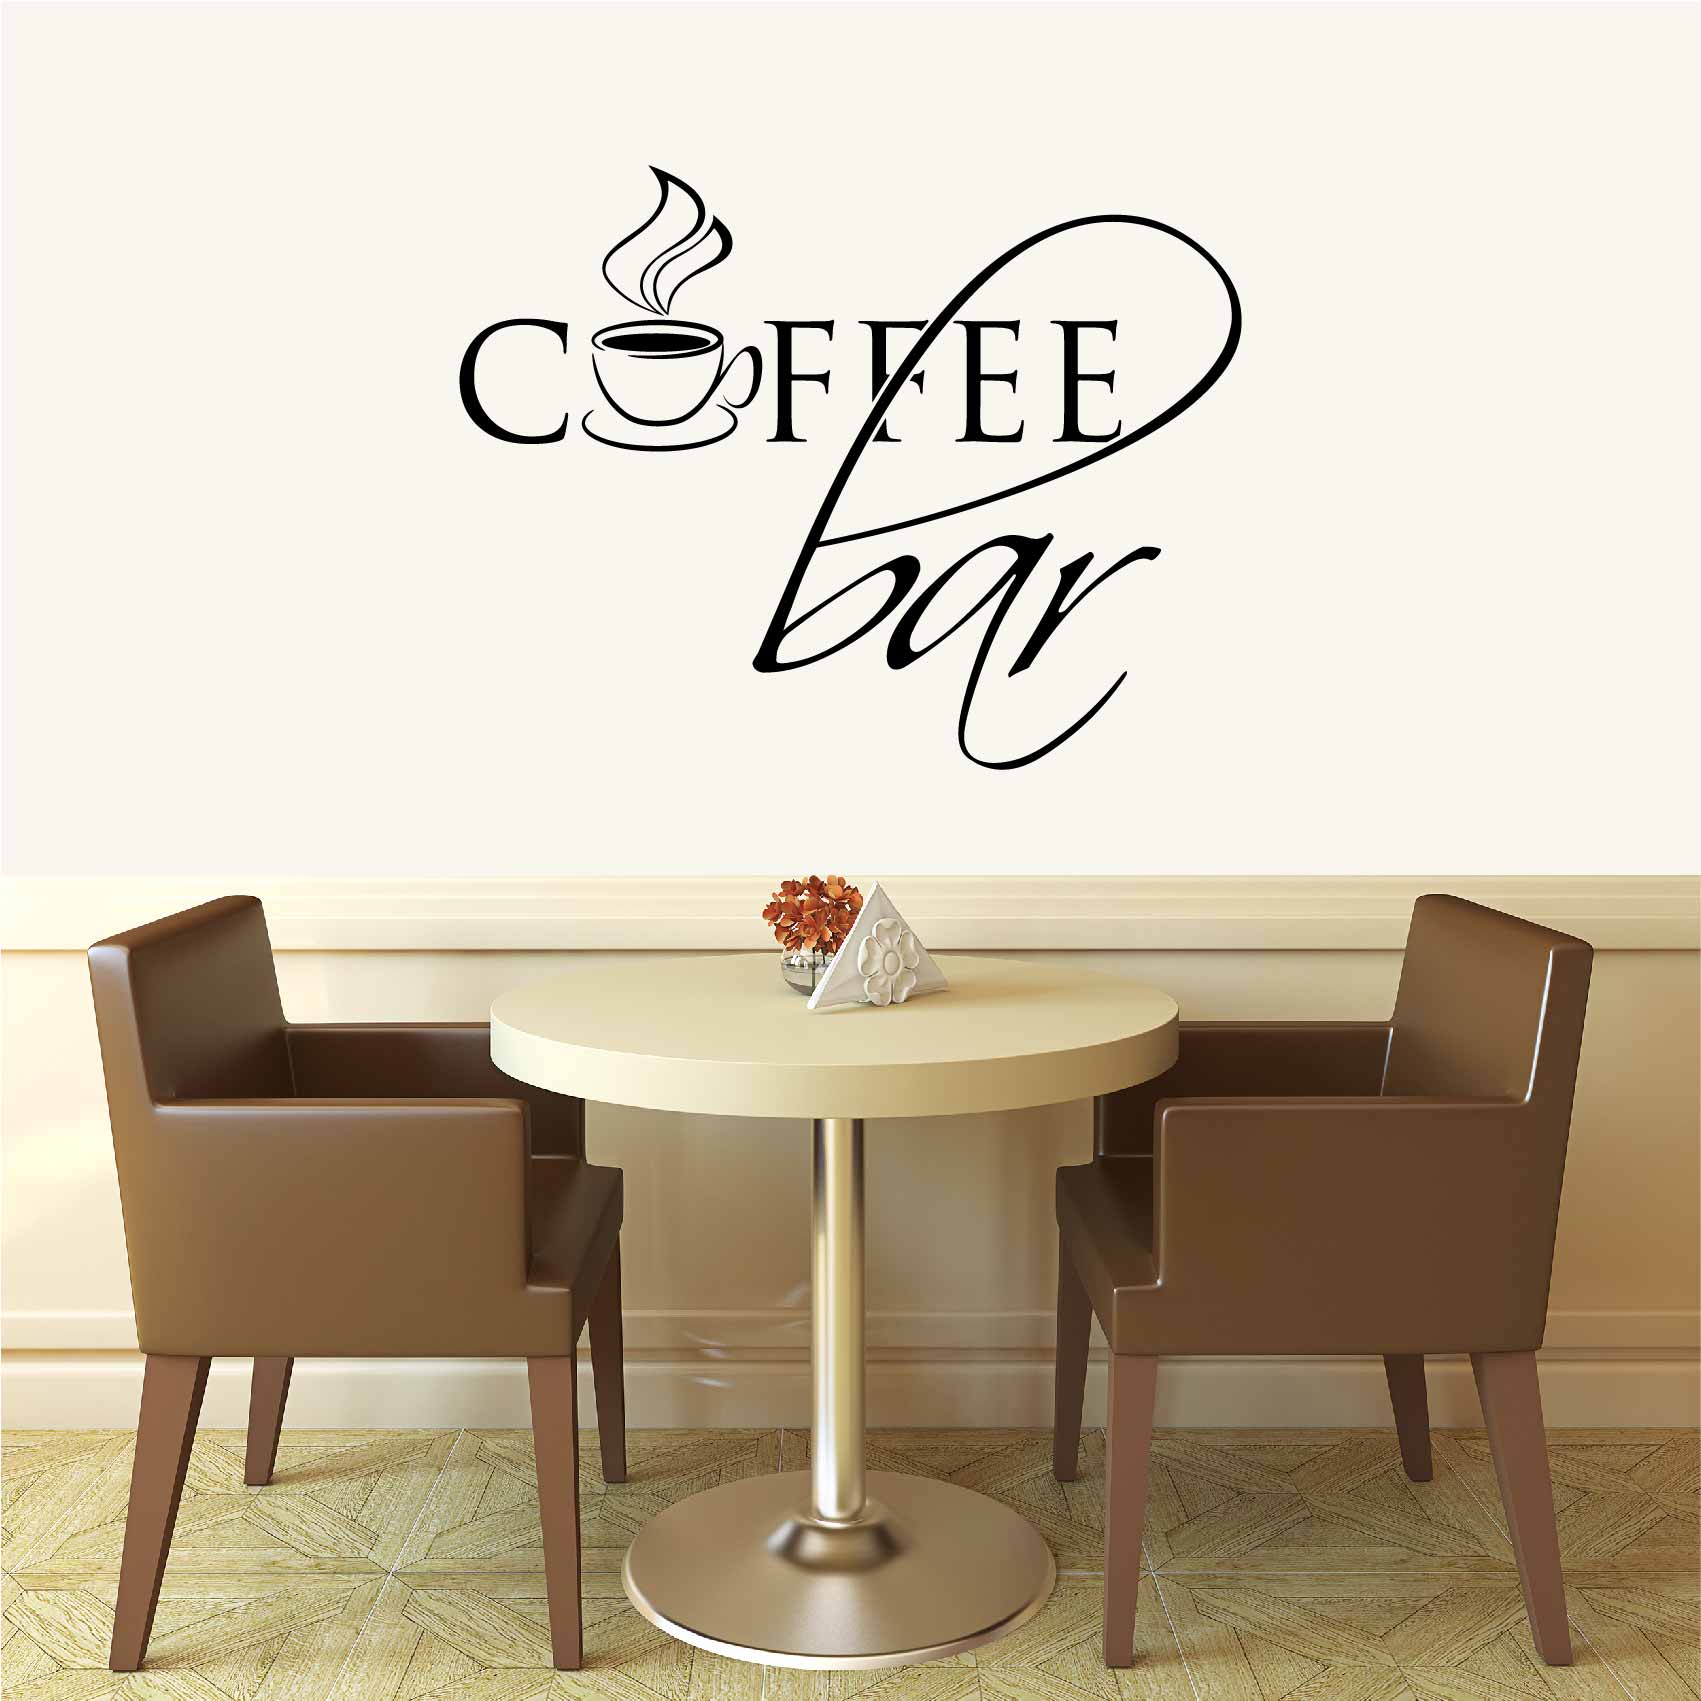 stickers-coffee-bar-ref16cafe-autocollant-muraux-café-sticker-mural-cuisine-cafe-deco-salon-table